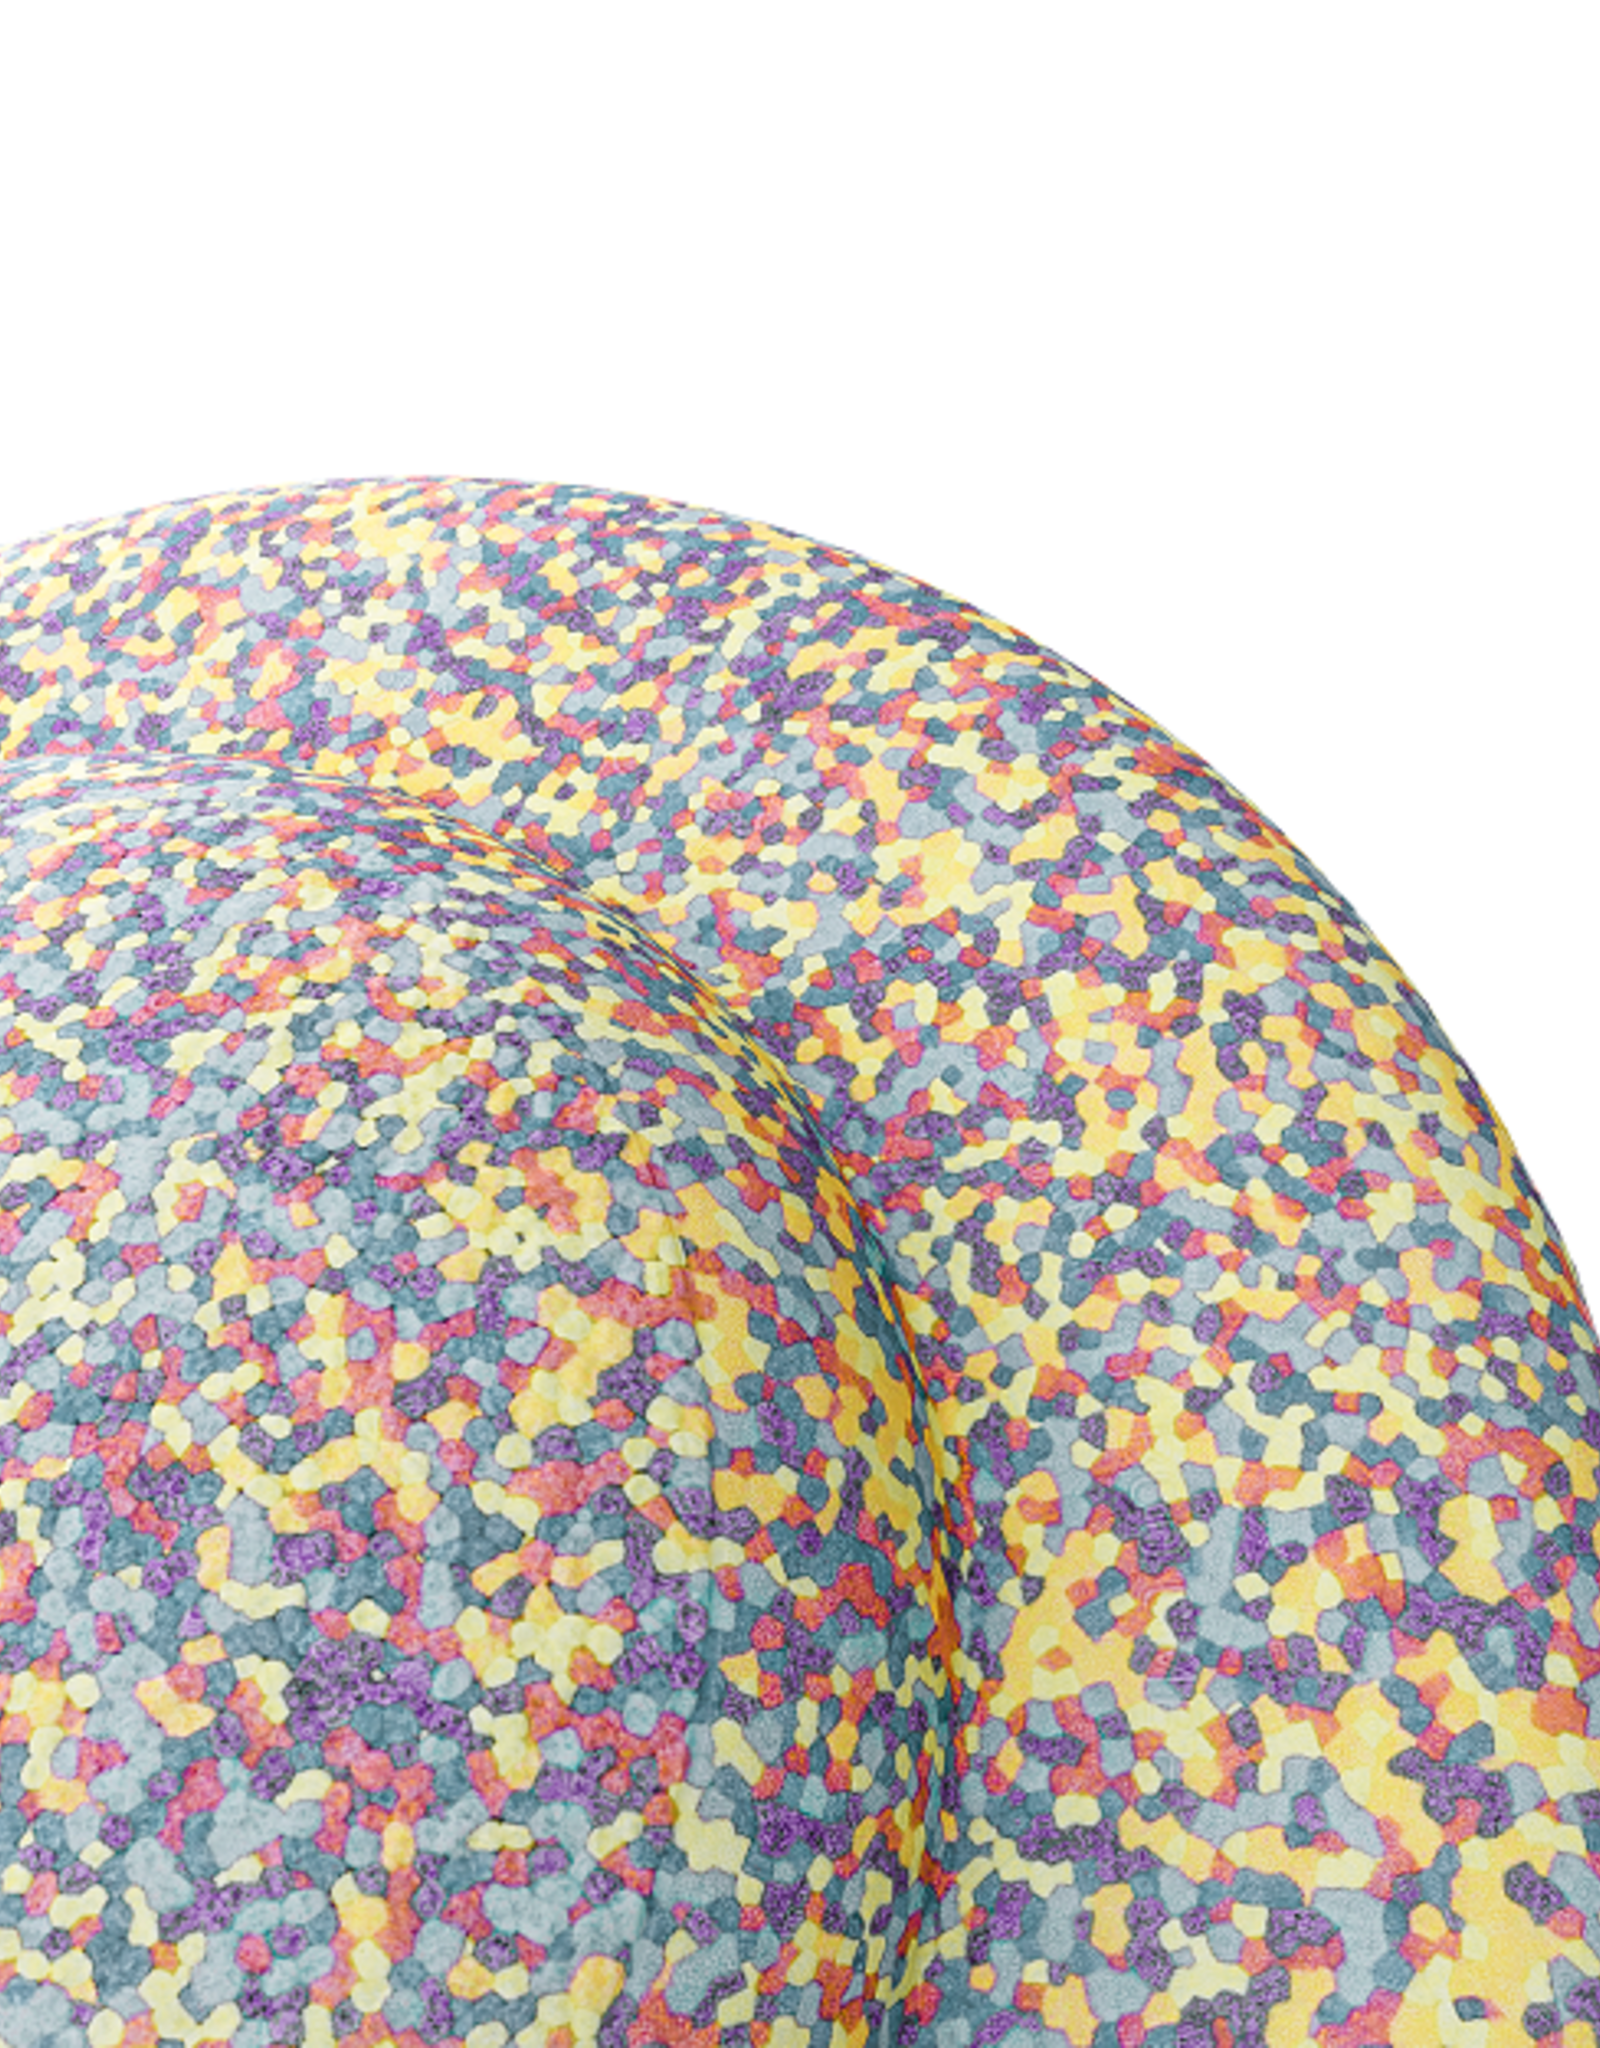 Stapelstein Balance Board Confetti pastel